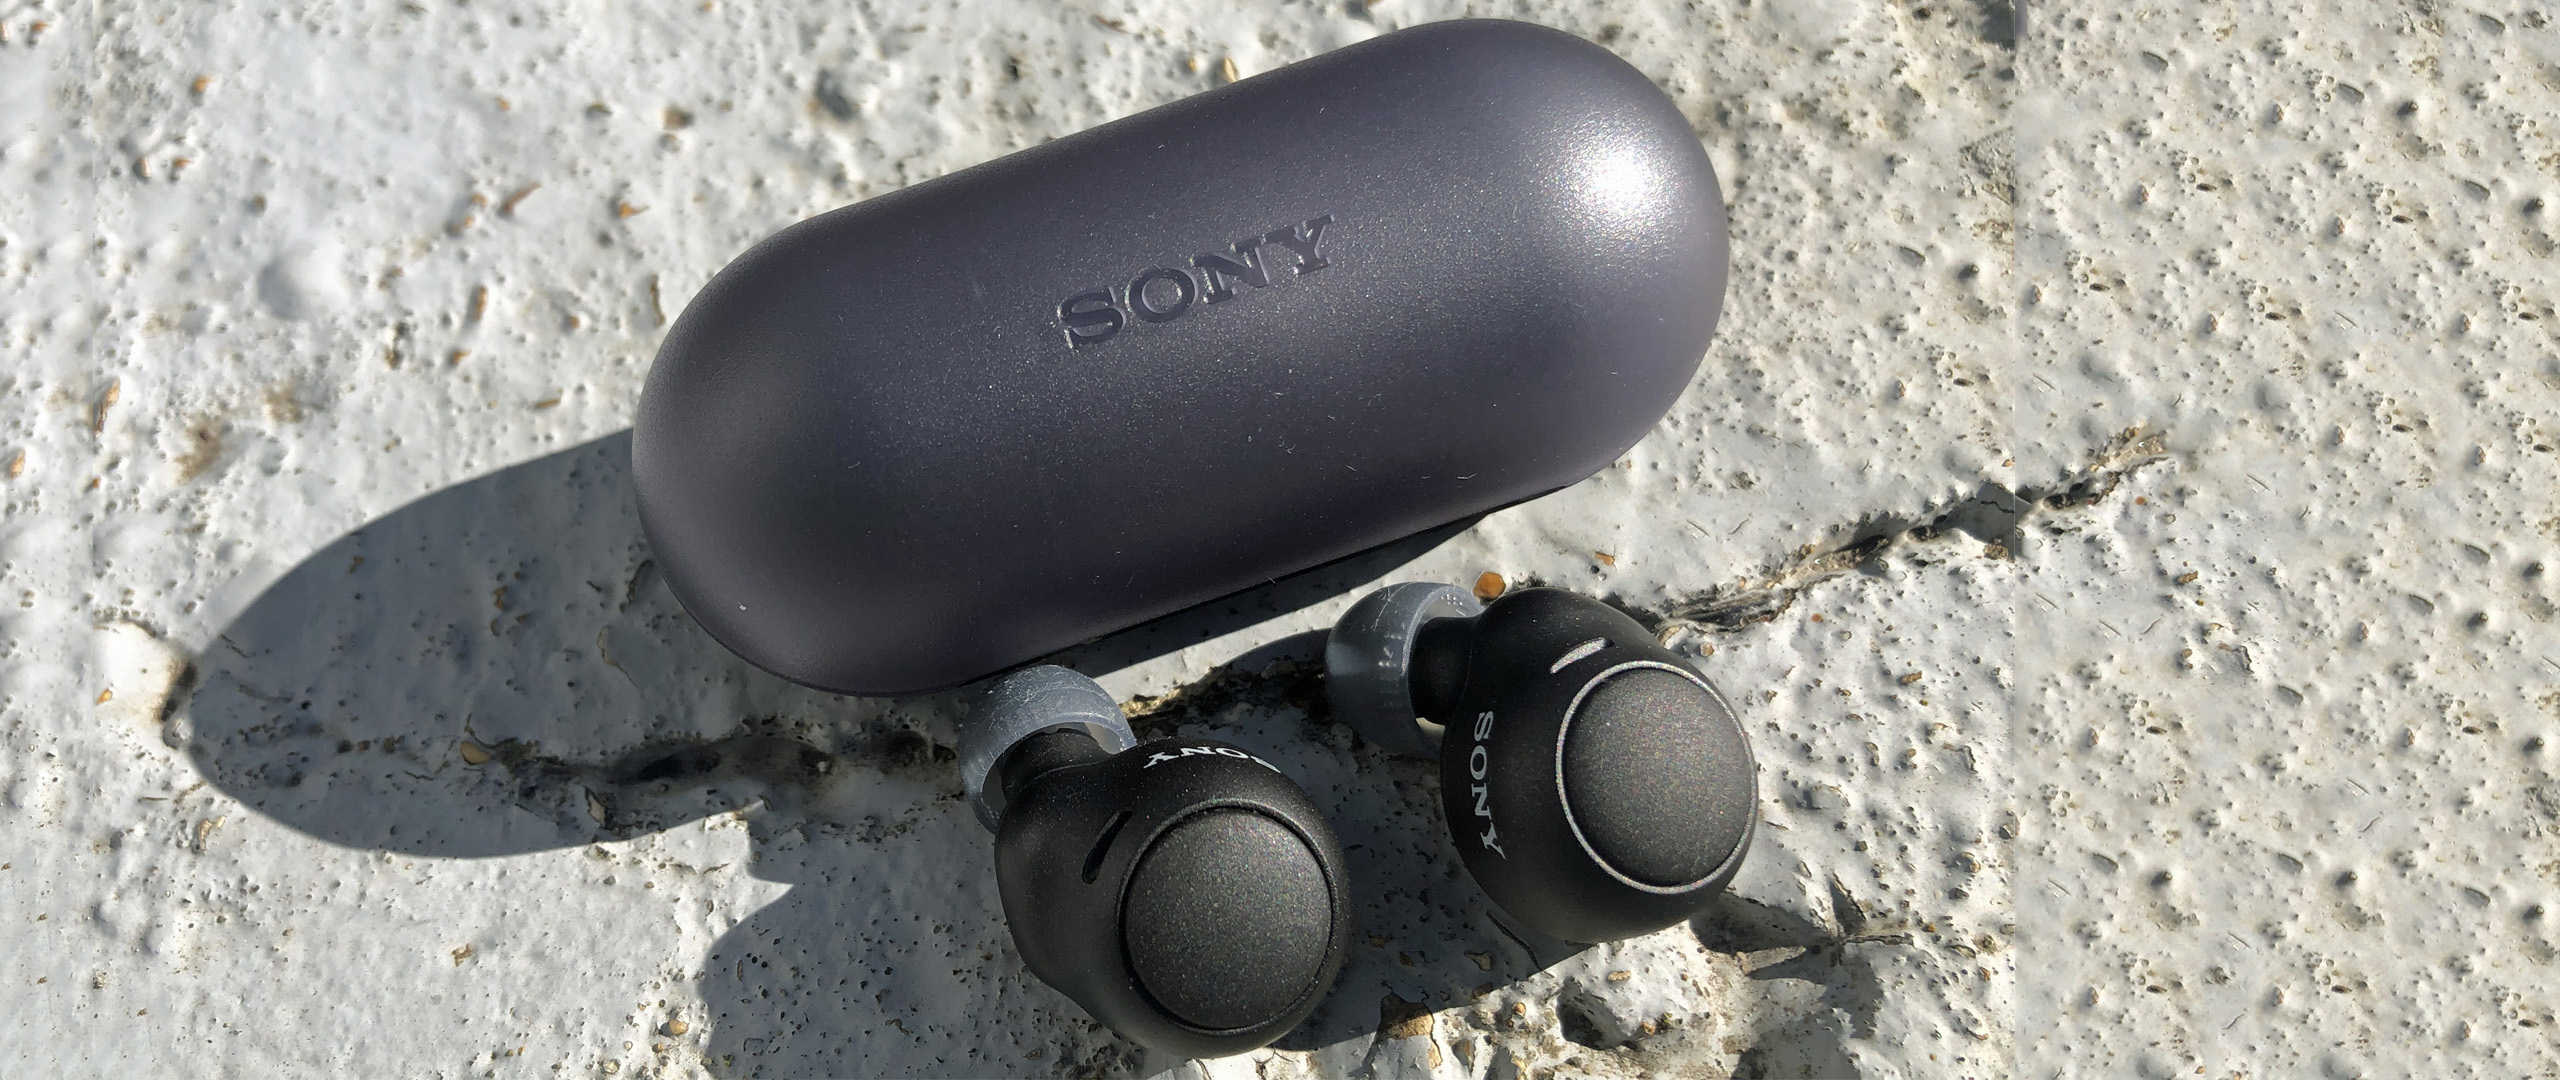 Charging case ONLY Sony WF-C500 headphones wireless earbuds Bluetooth  earphones